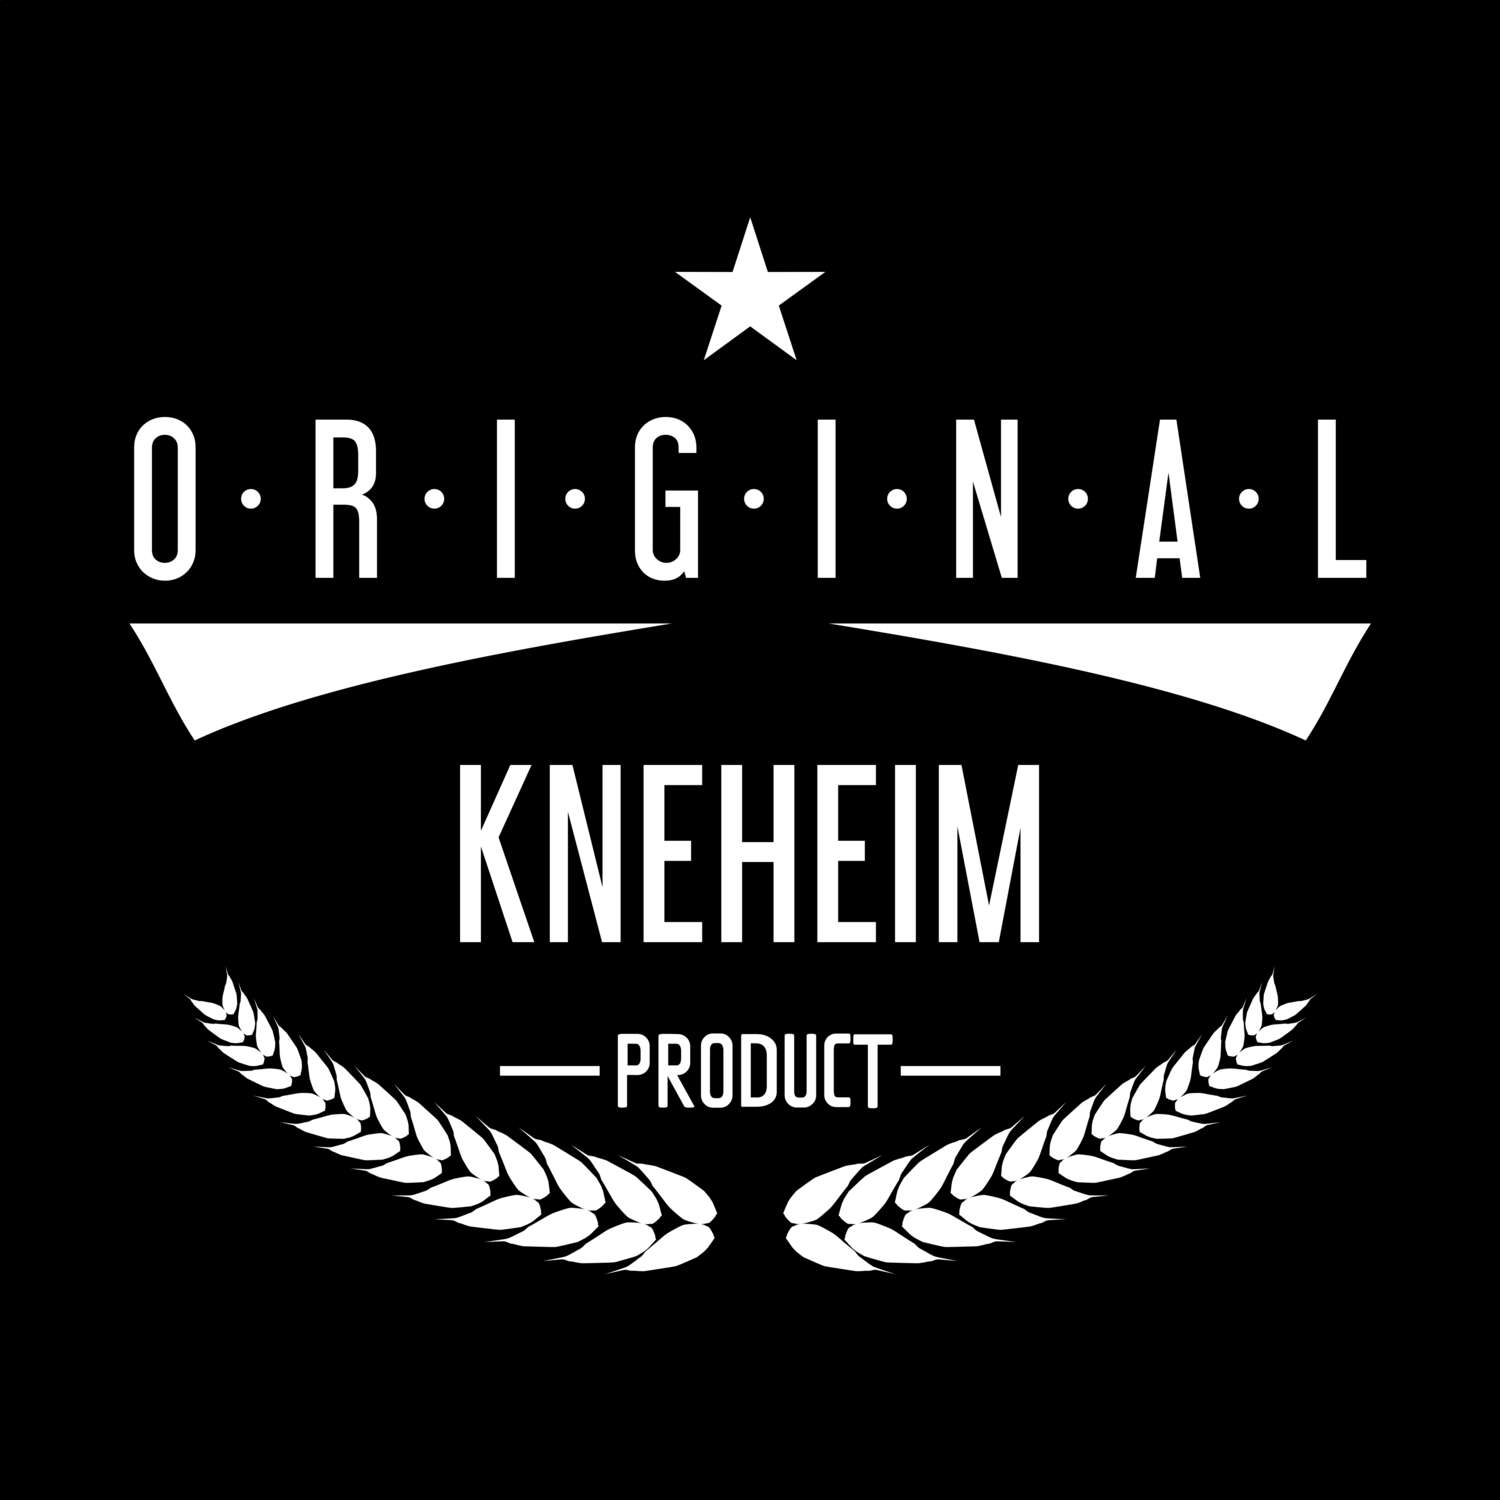 Kneheim T-Shirt »Original Product«